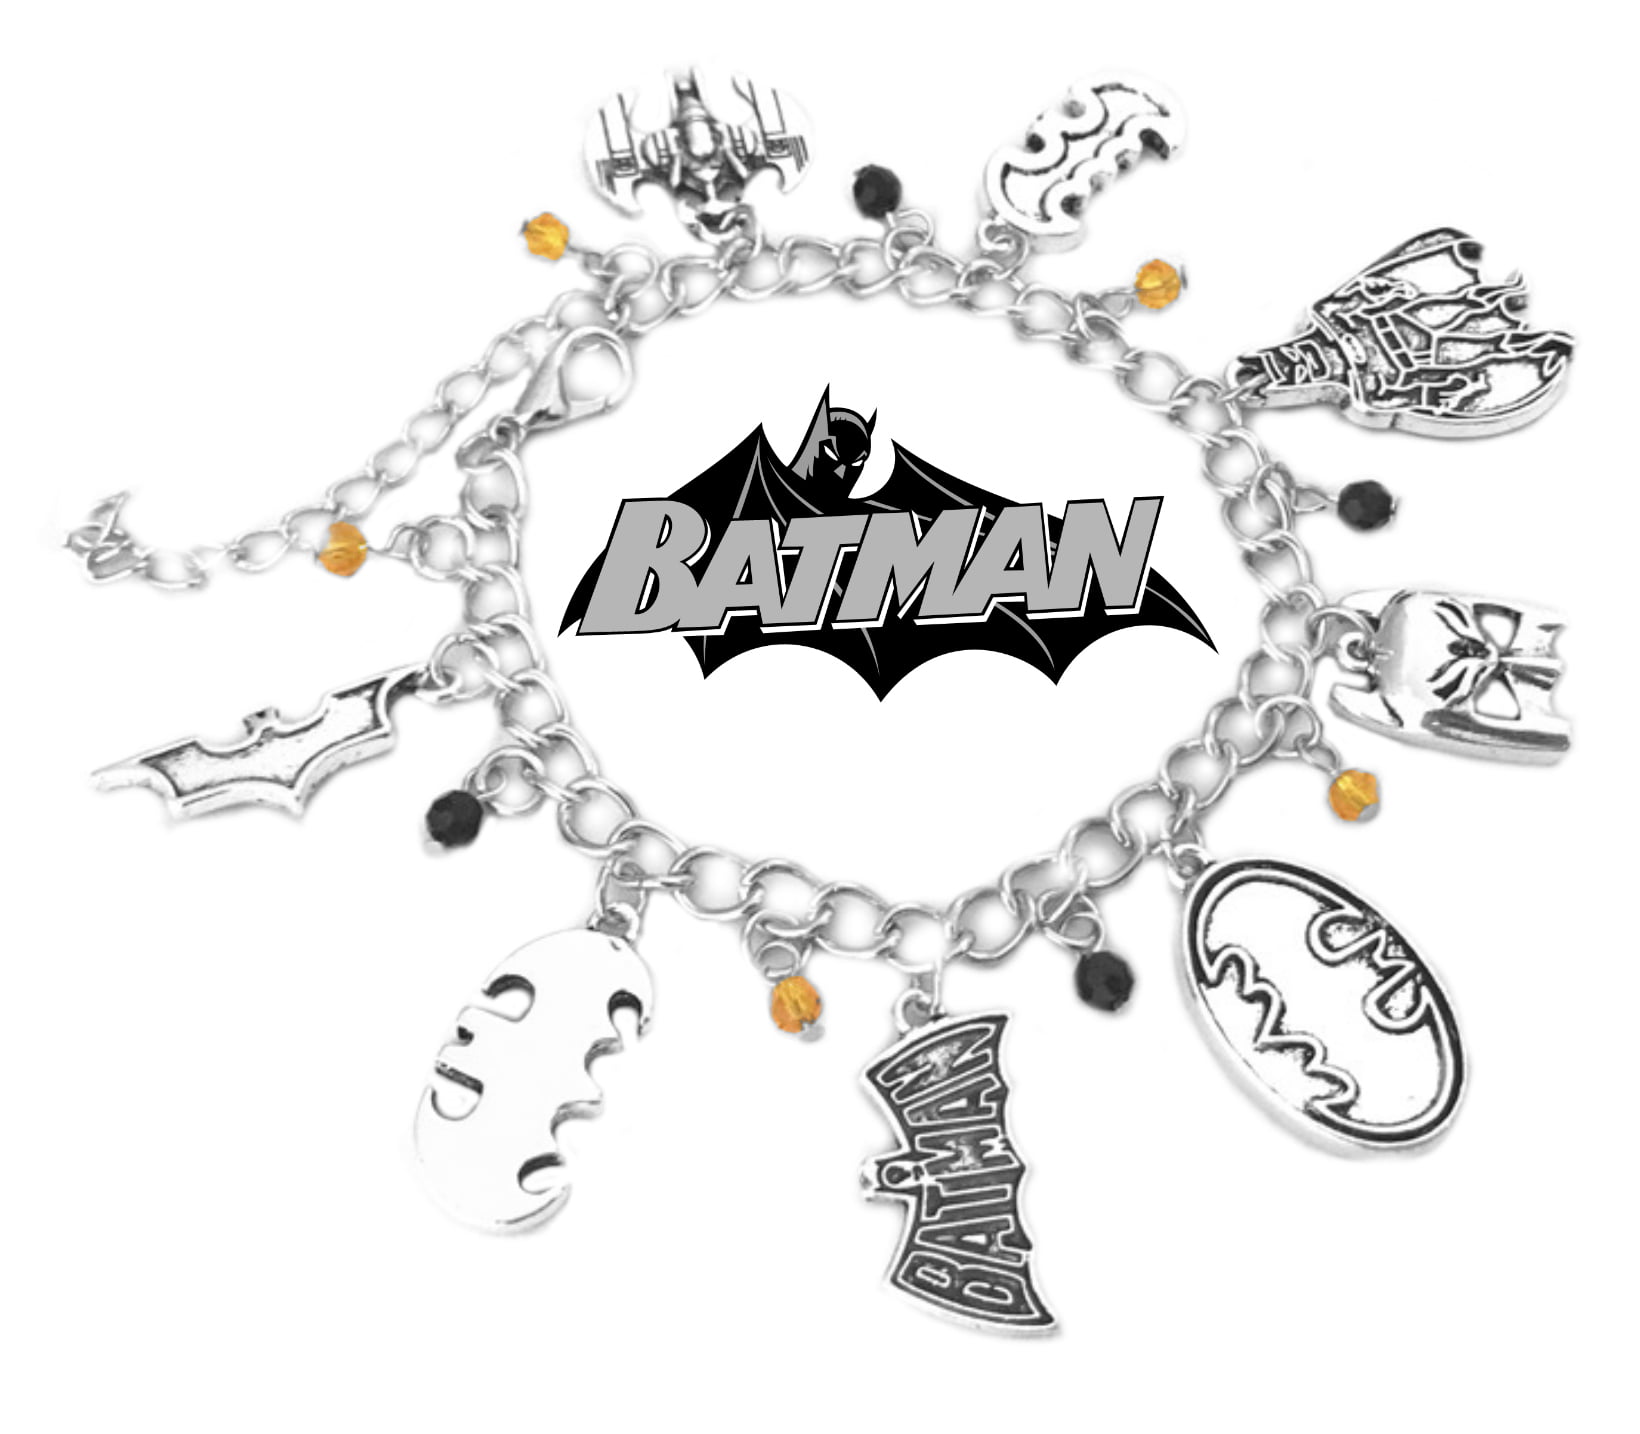 NEW Wholesale 8 pcs Batman DIY Jewelry Making Metal Figures Pendant Charms 